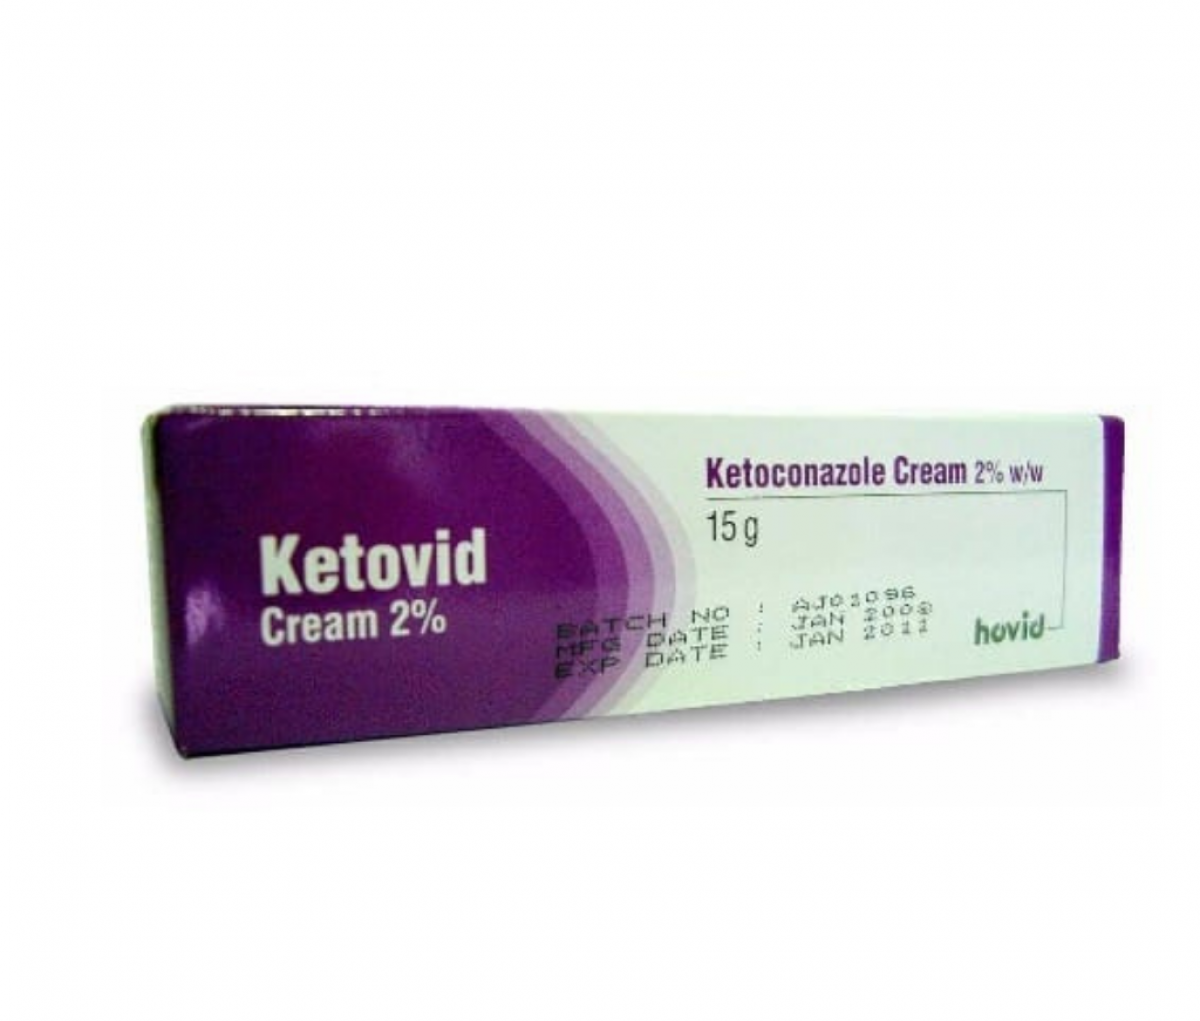 KETOVID CREAM 2%ketovid cream 2%